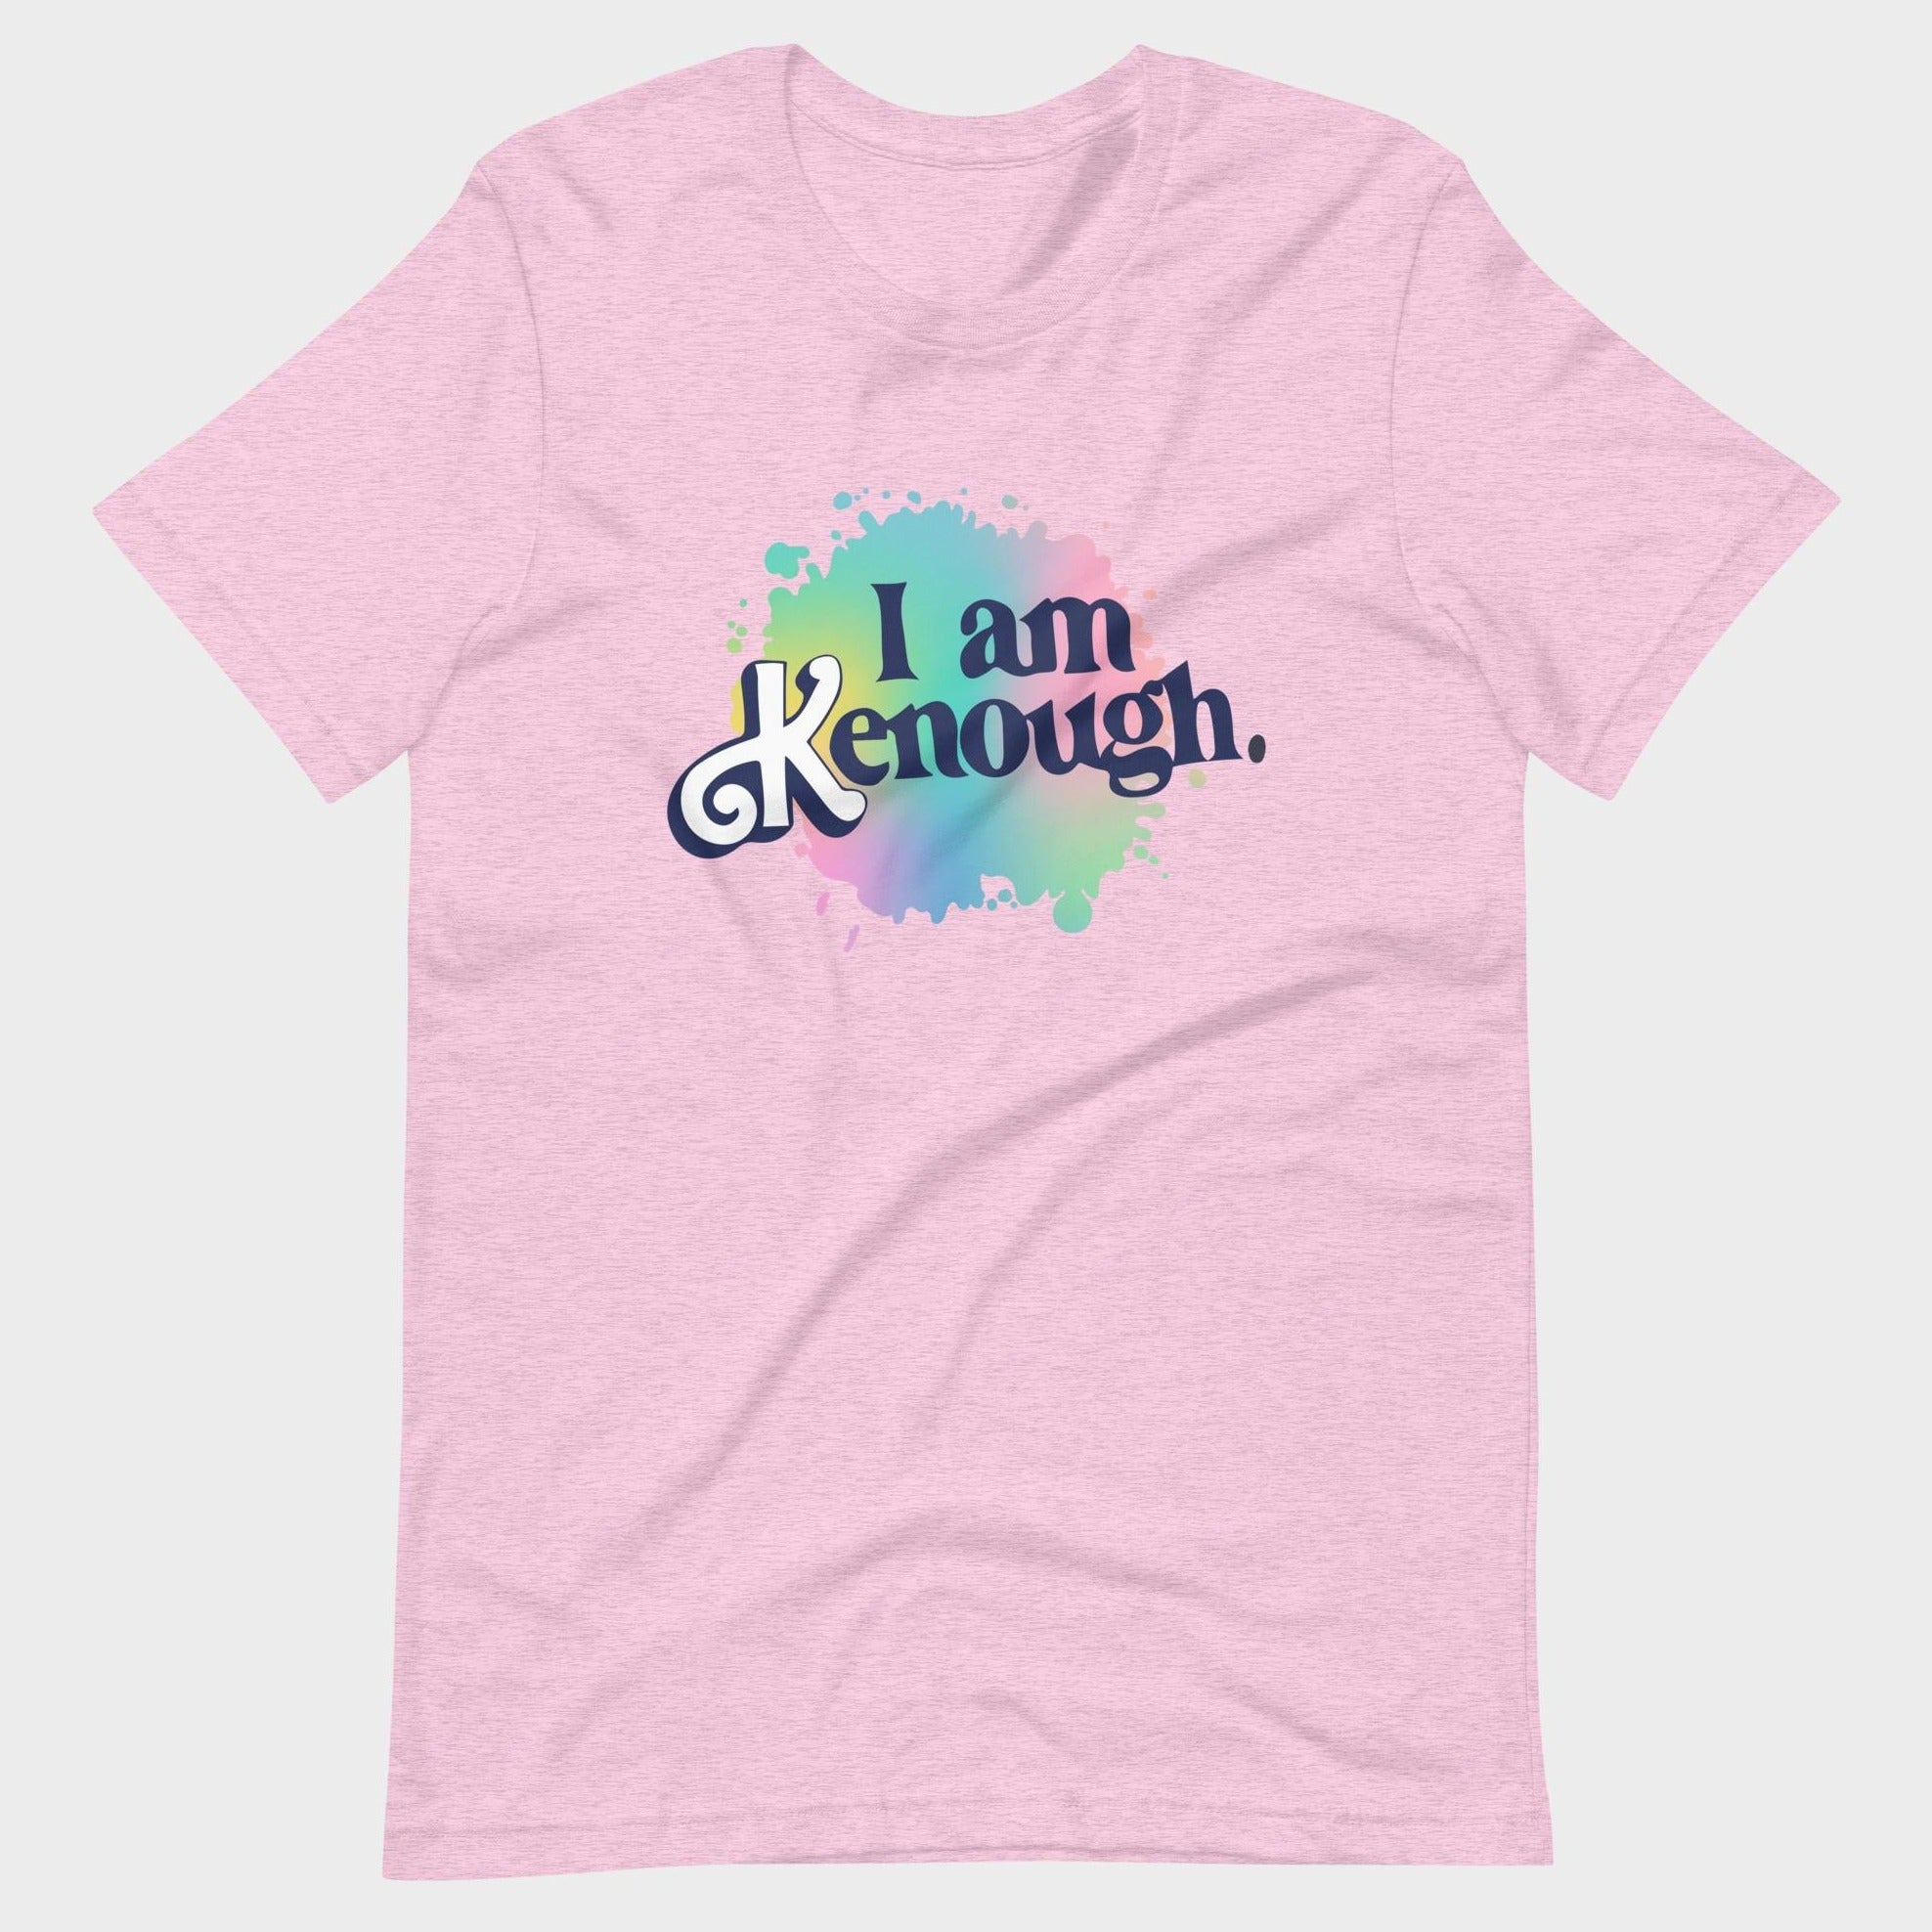 I Am Kenough - T-Shirt